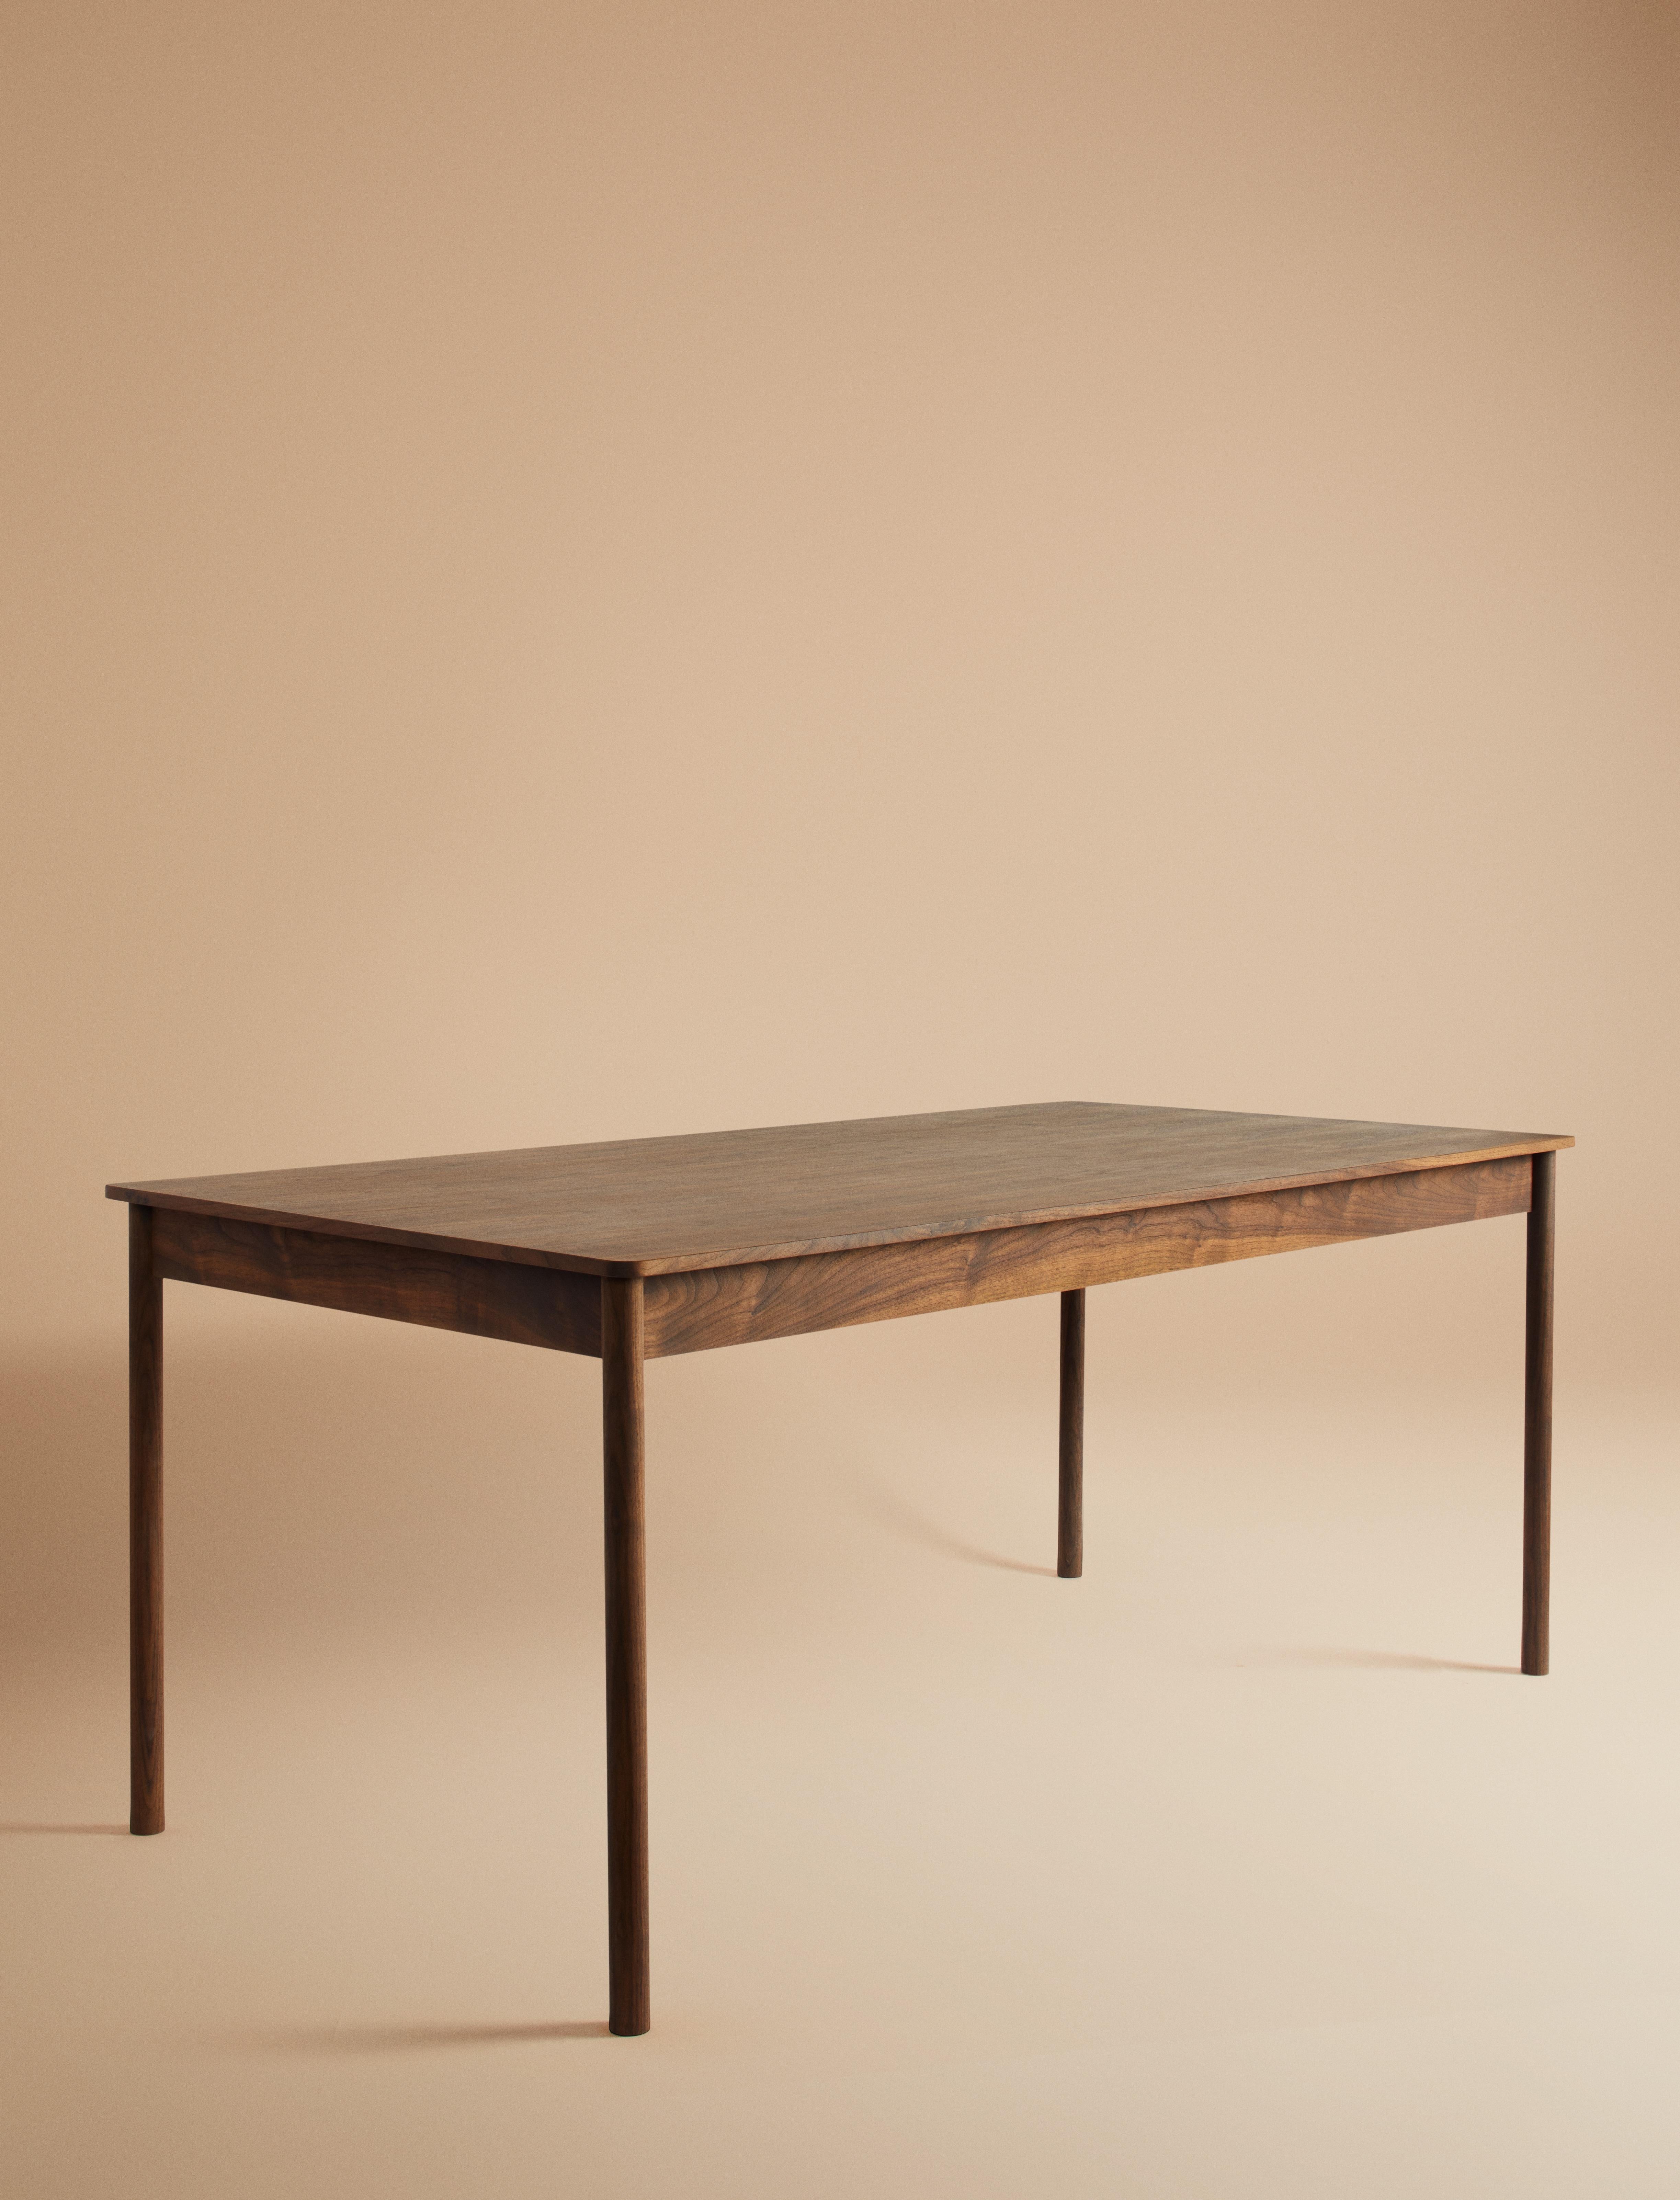 Sutton Table Handcrafted in Walnut or Oak Designed by Kevin Frankental for Lemon 2